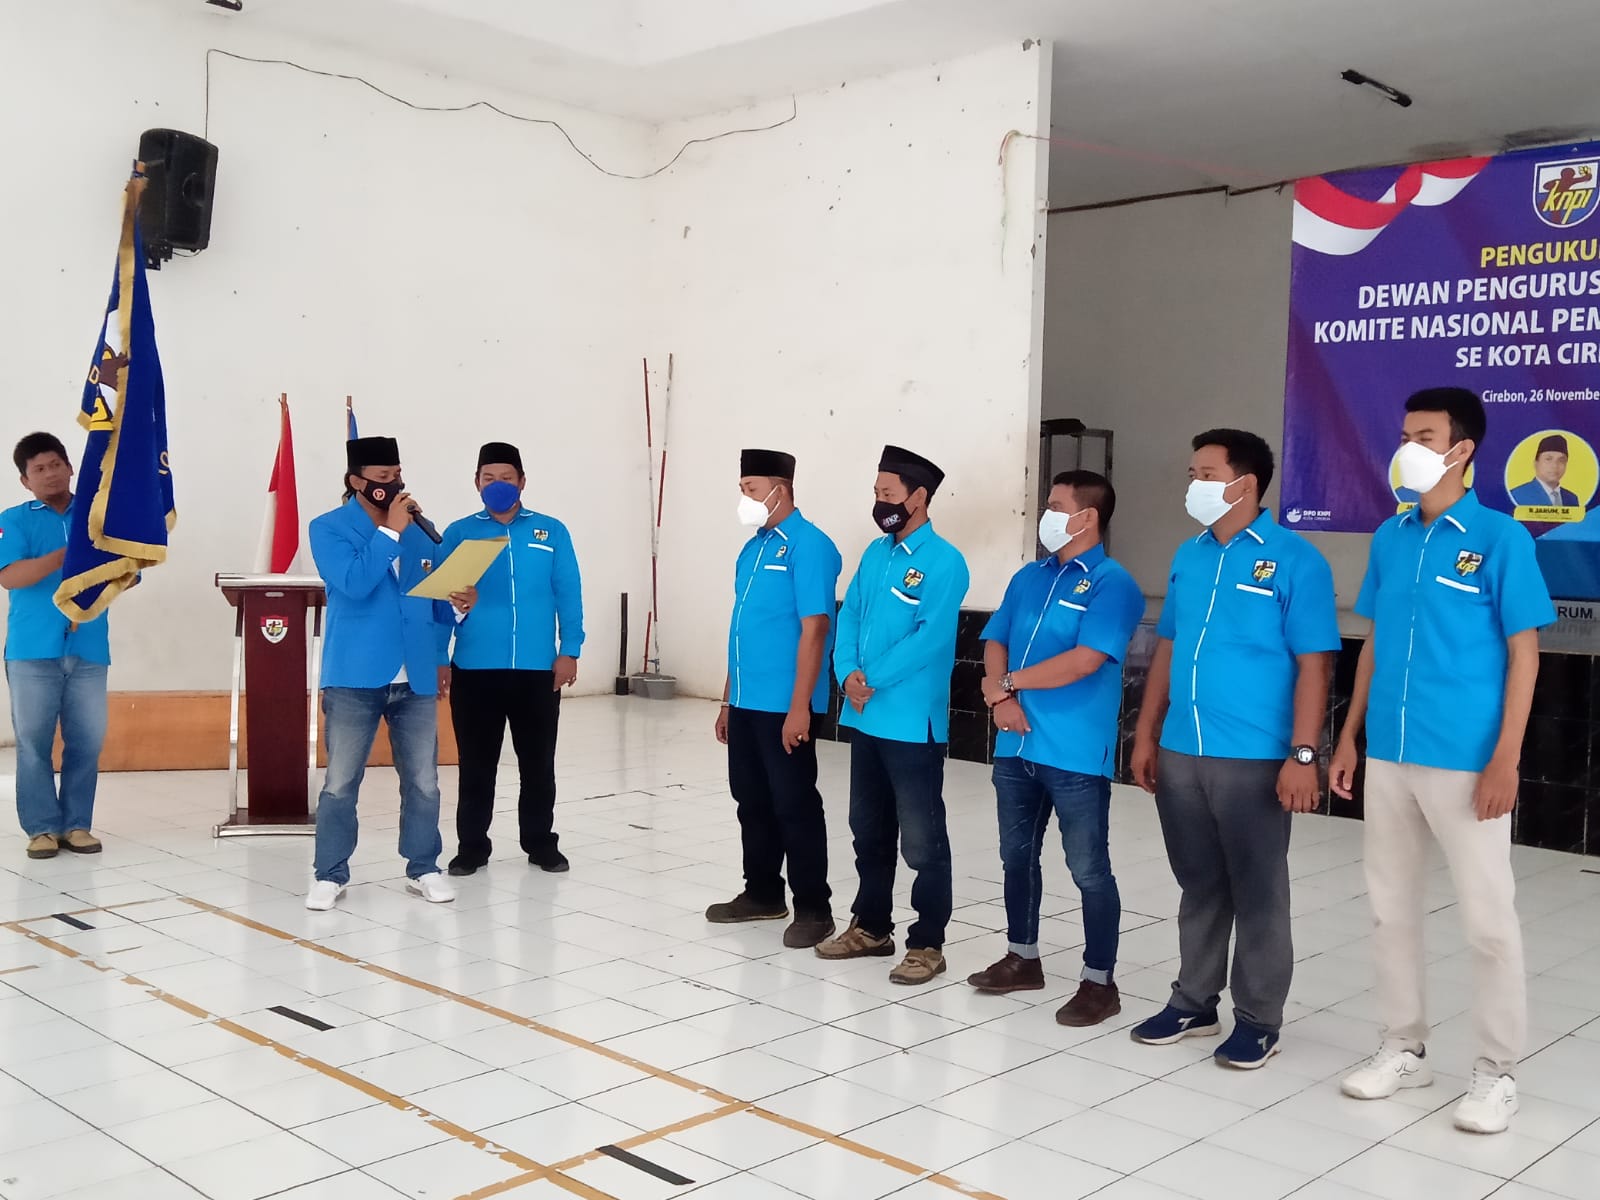 Jarum: Pemuda Harus Hadir untuk Kota Cirebon